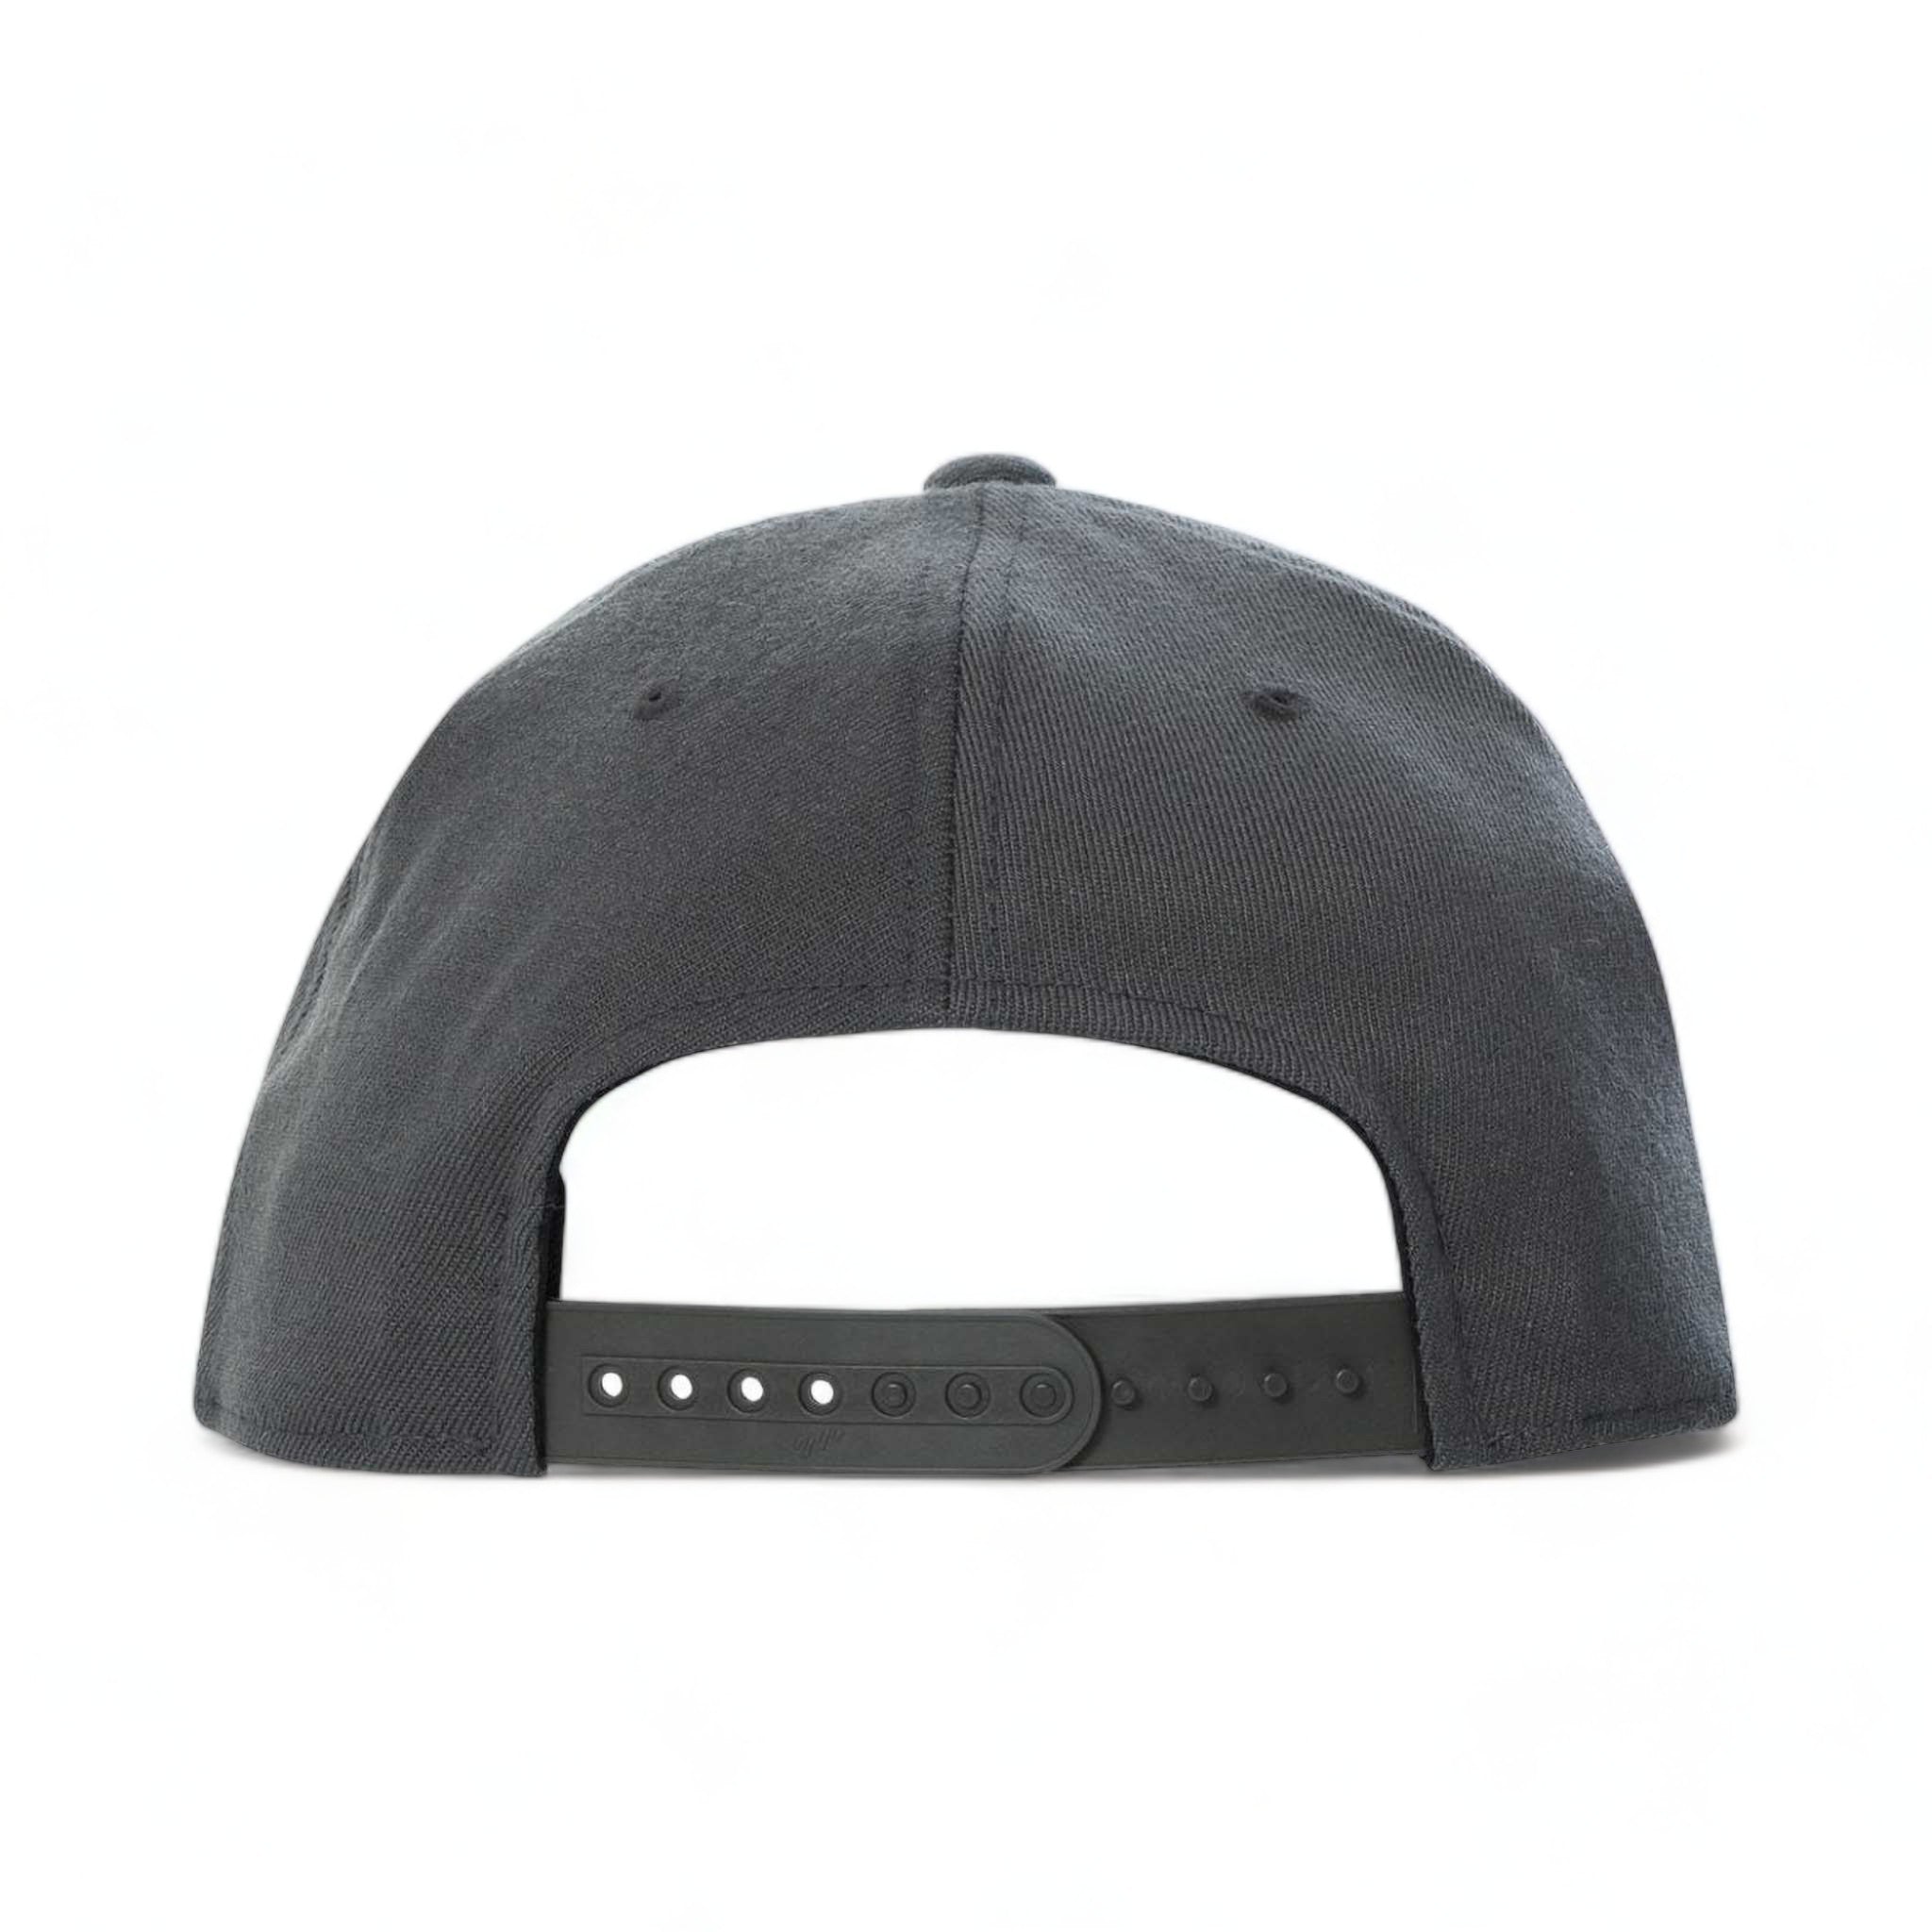 Back view of Flexfit 110F custom hat in dark grey